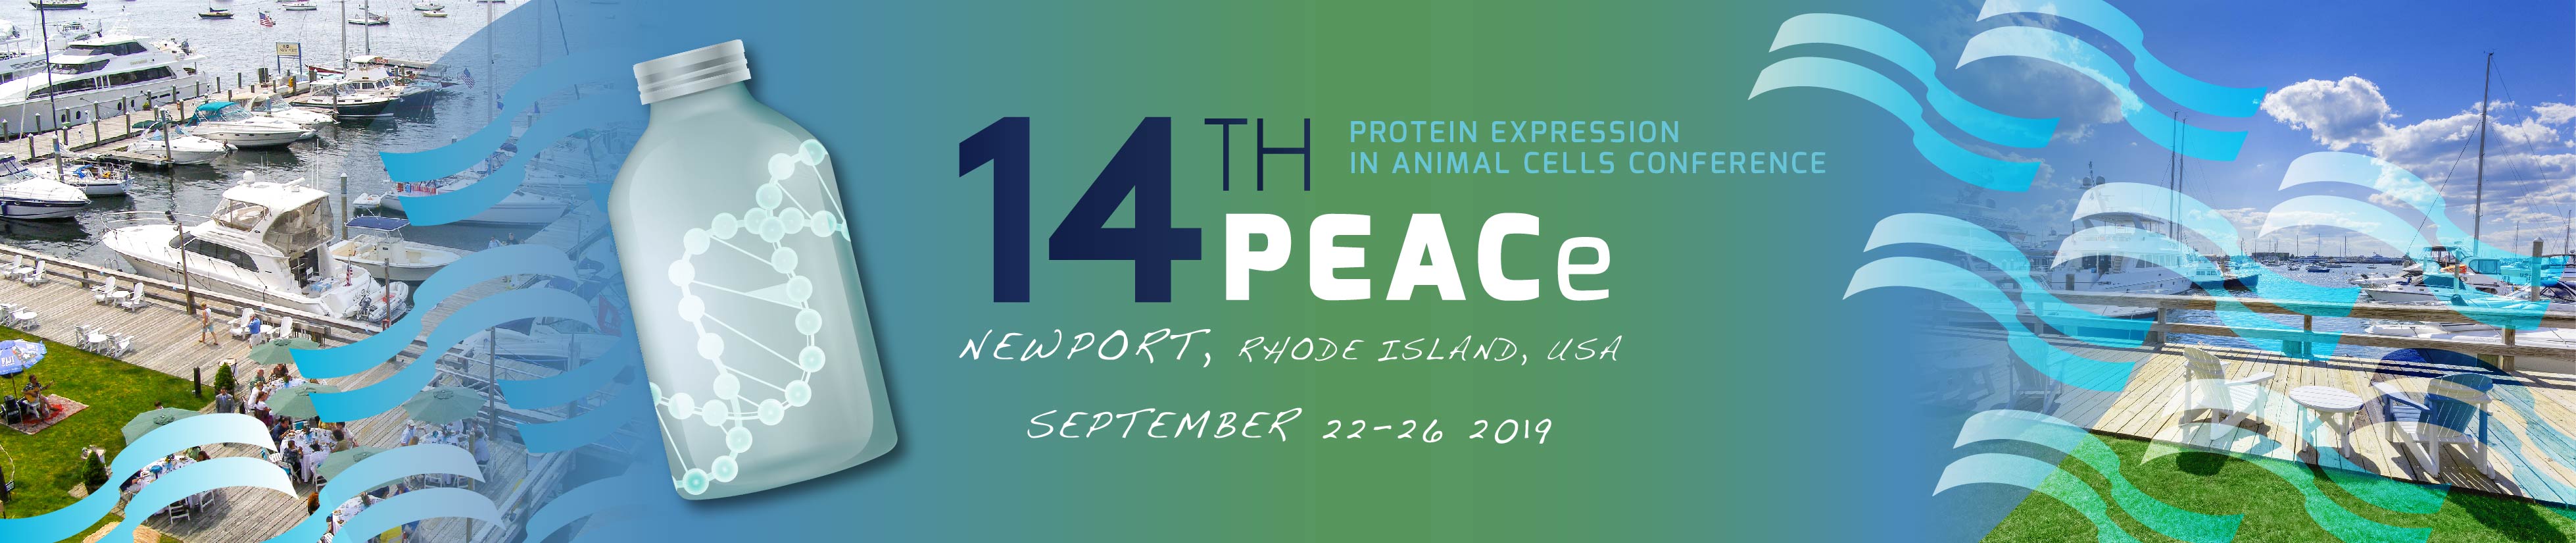 PEACe 2019 – Newport, USA – September 22-26th, 2019